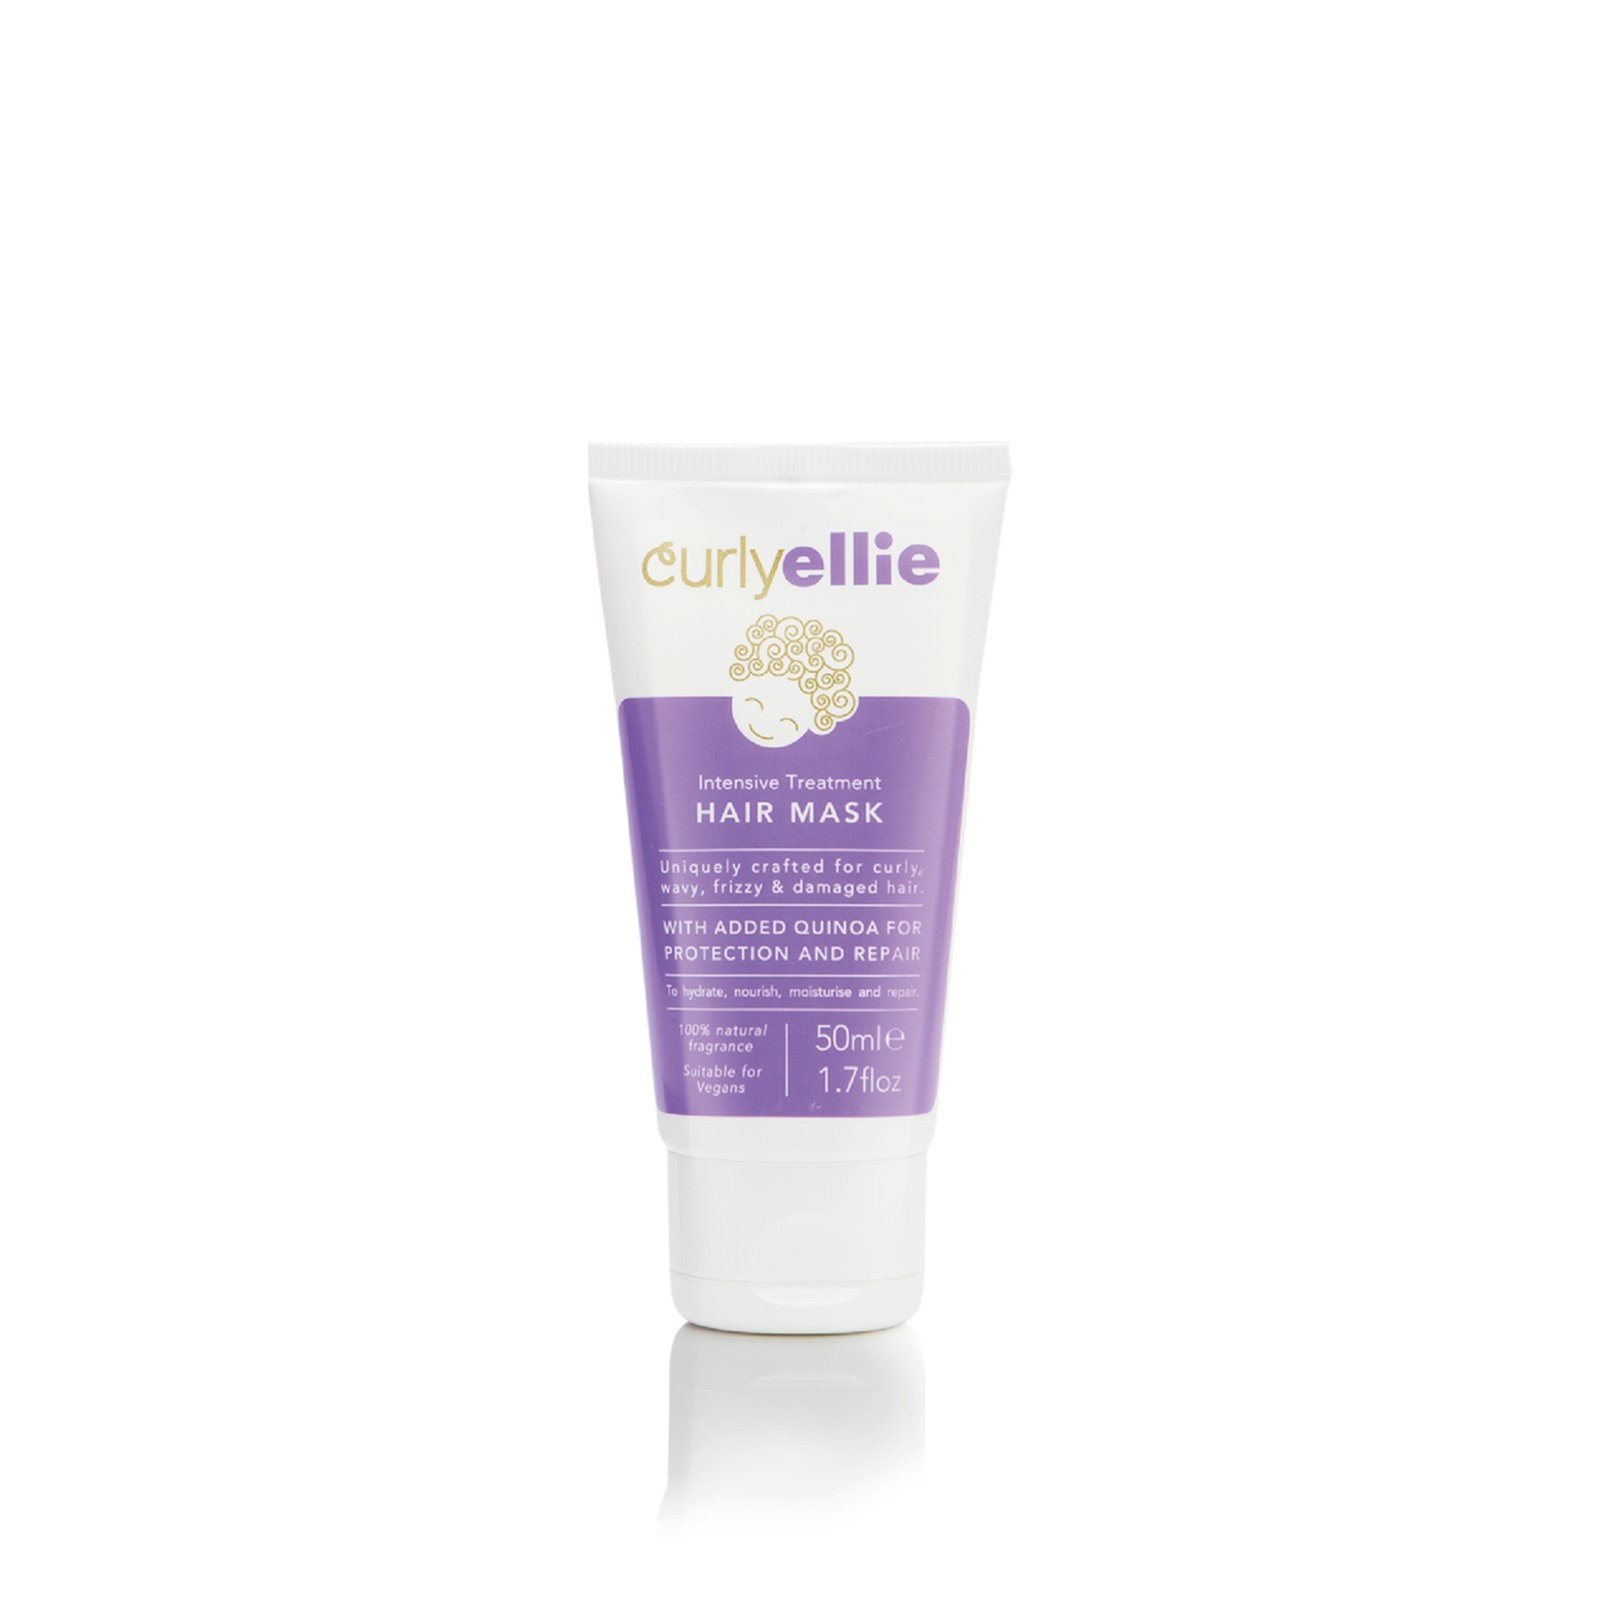 CurlyEllie Intensive Treatment Hair Mask 50ml